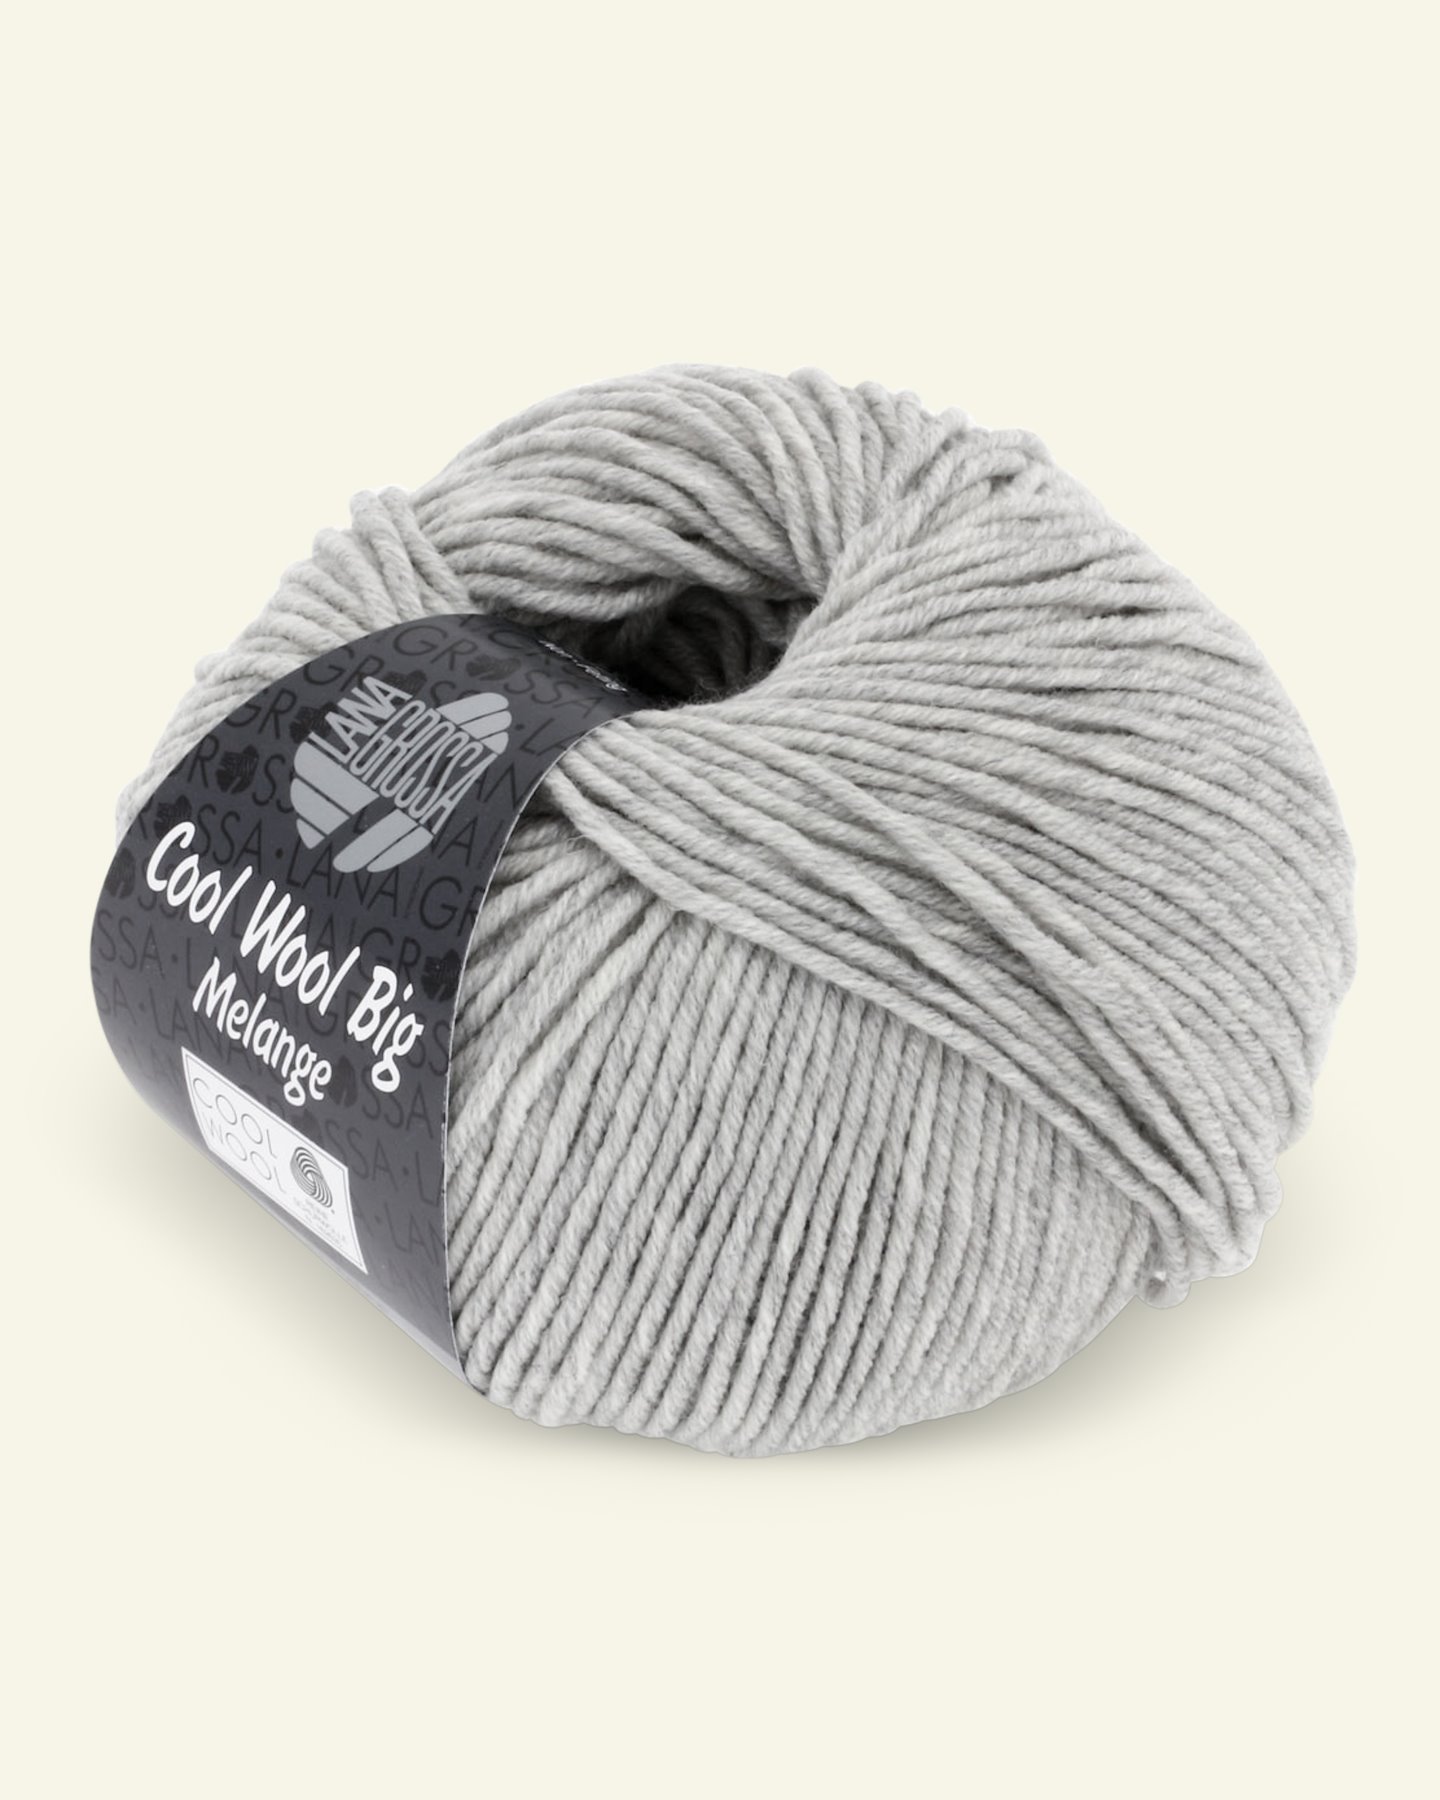 Lana Grossa, extrafine merino wool yarn "Cool Wool Big", light grey mel 90001085_pack